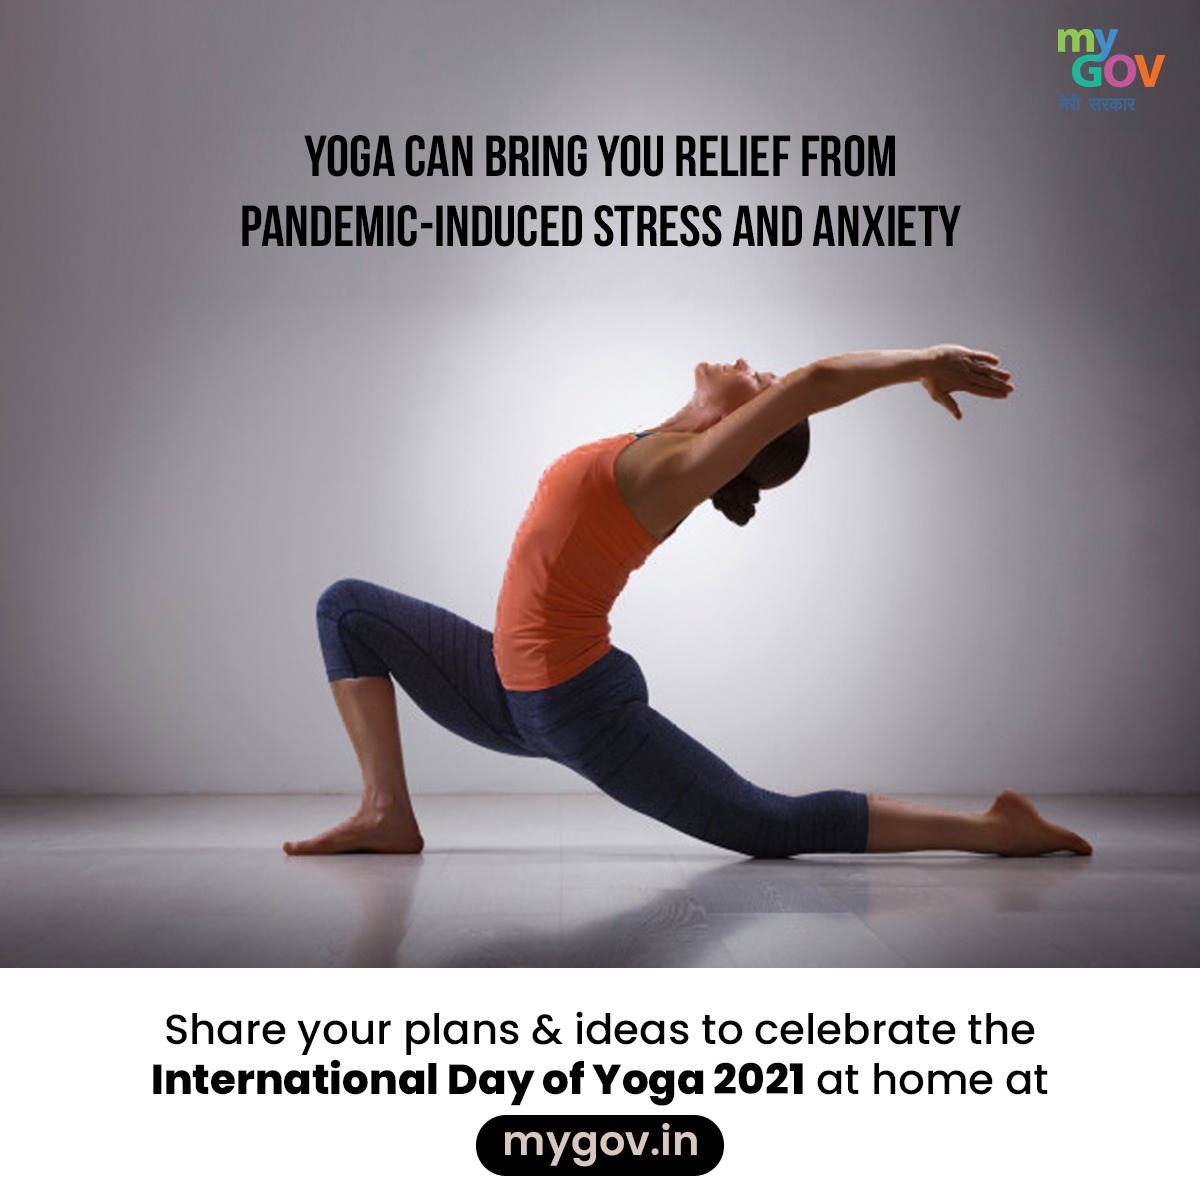 Be with yoga 🧘‍♂️, Be at home 🏠
Gear up to celebrate,
@mygovindia

#BeatStress #MentalWellness
#InternationalYogaDay2021